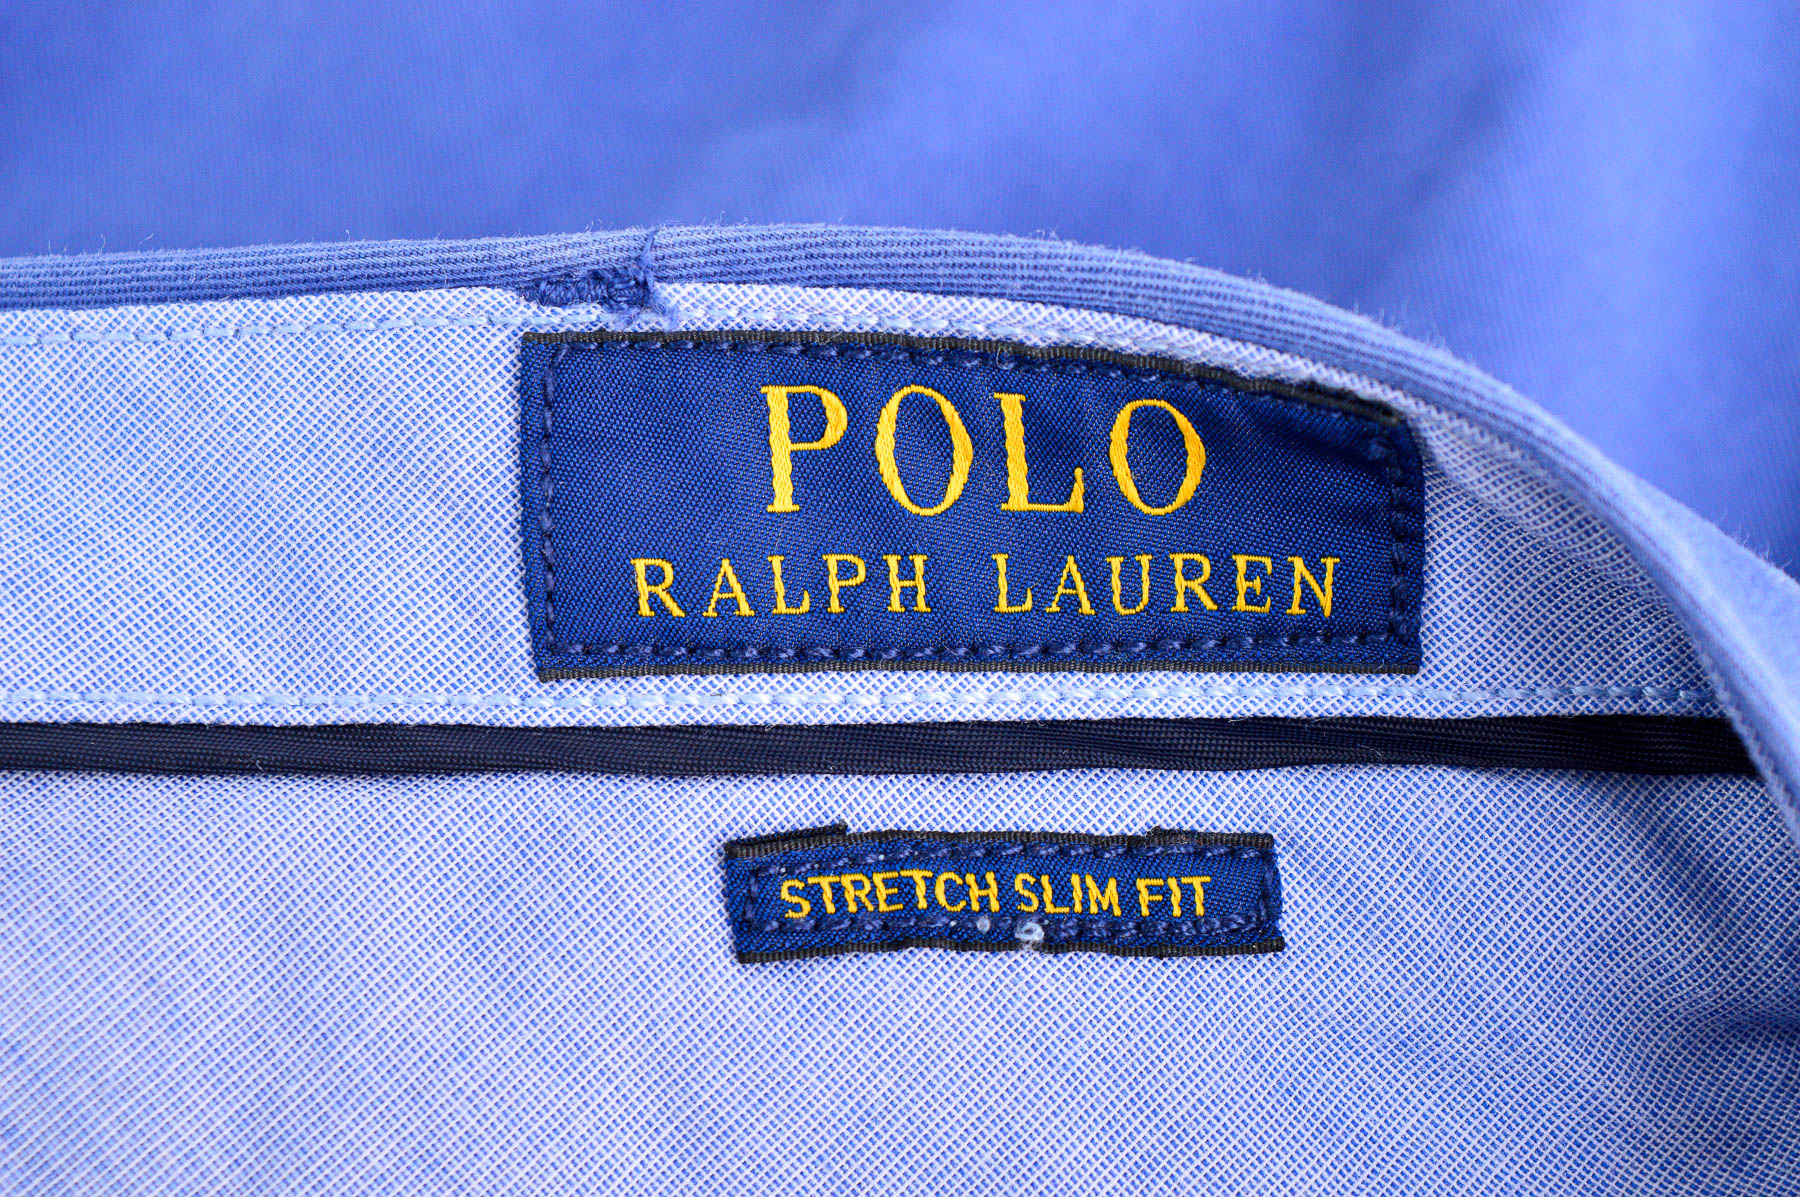 Men's trousers - POLO RALPH LAUREN - 2